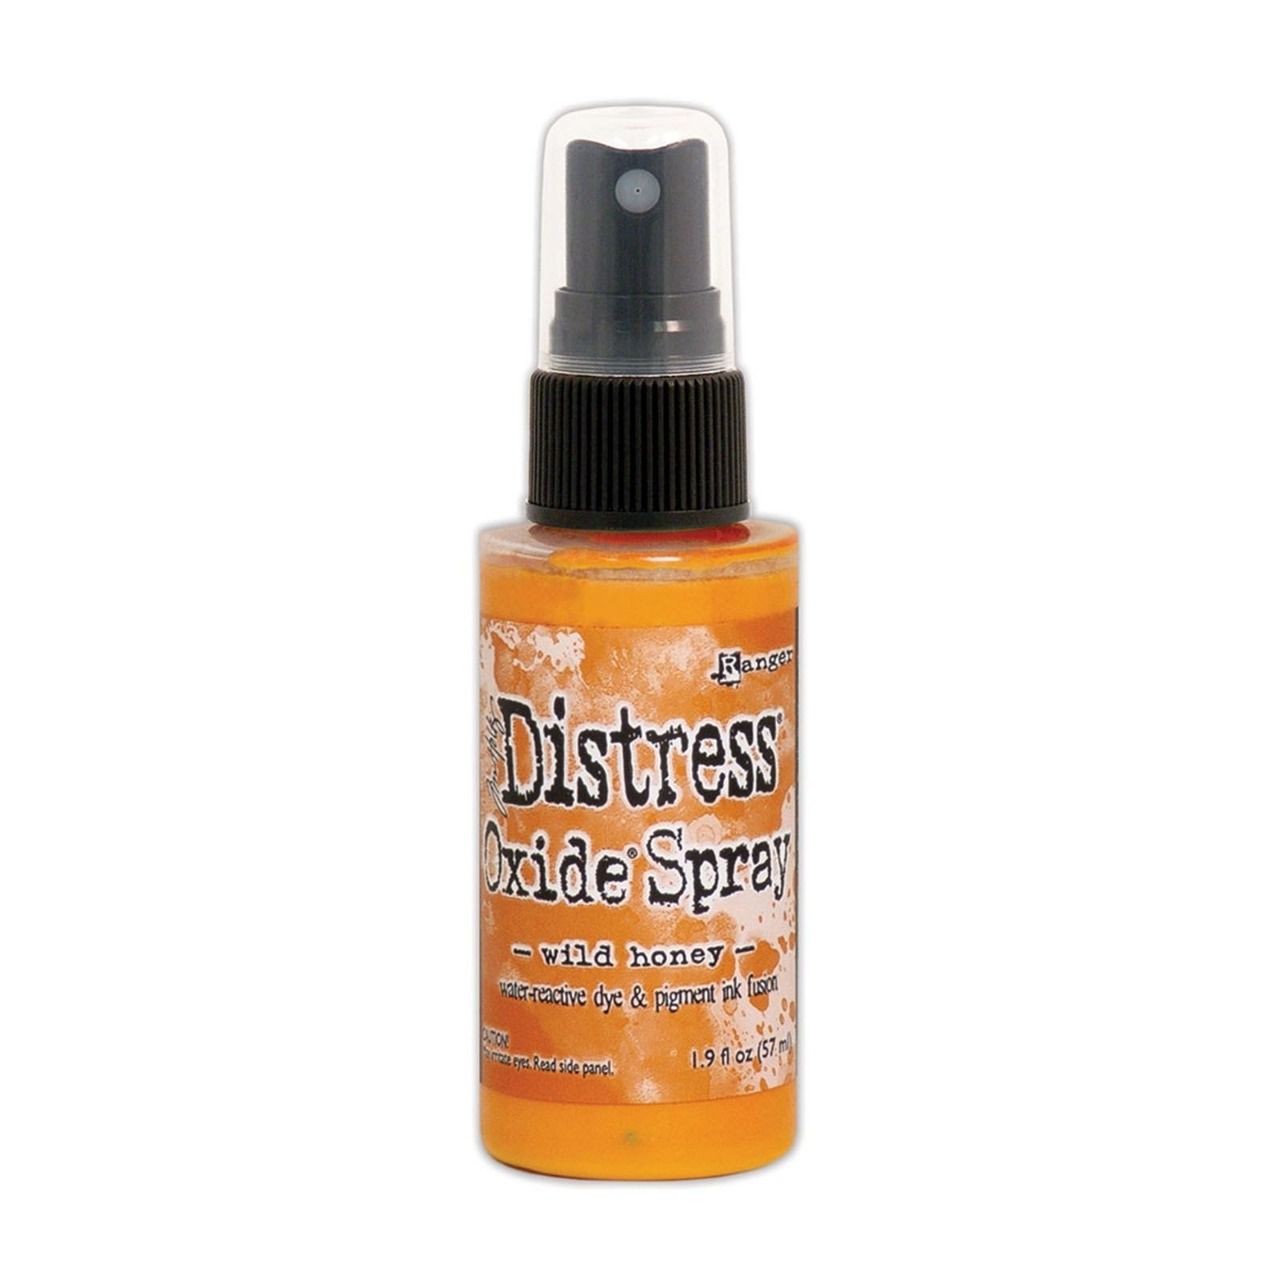 Distress spray oxide : Wild honey